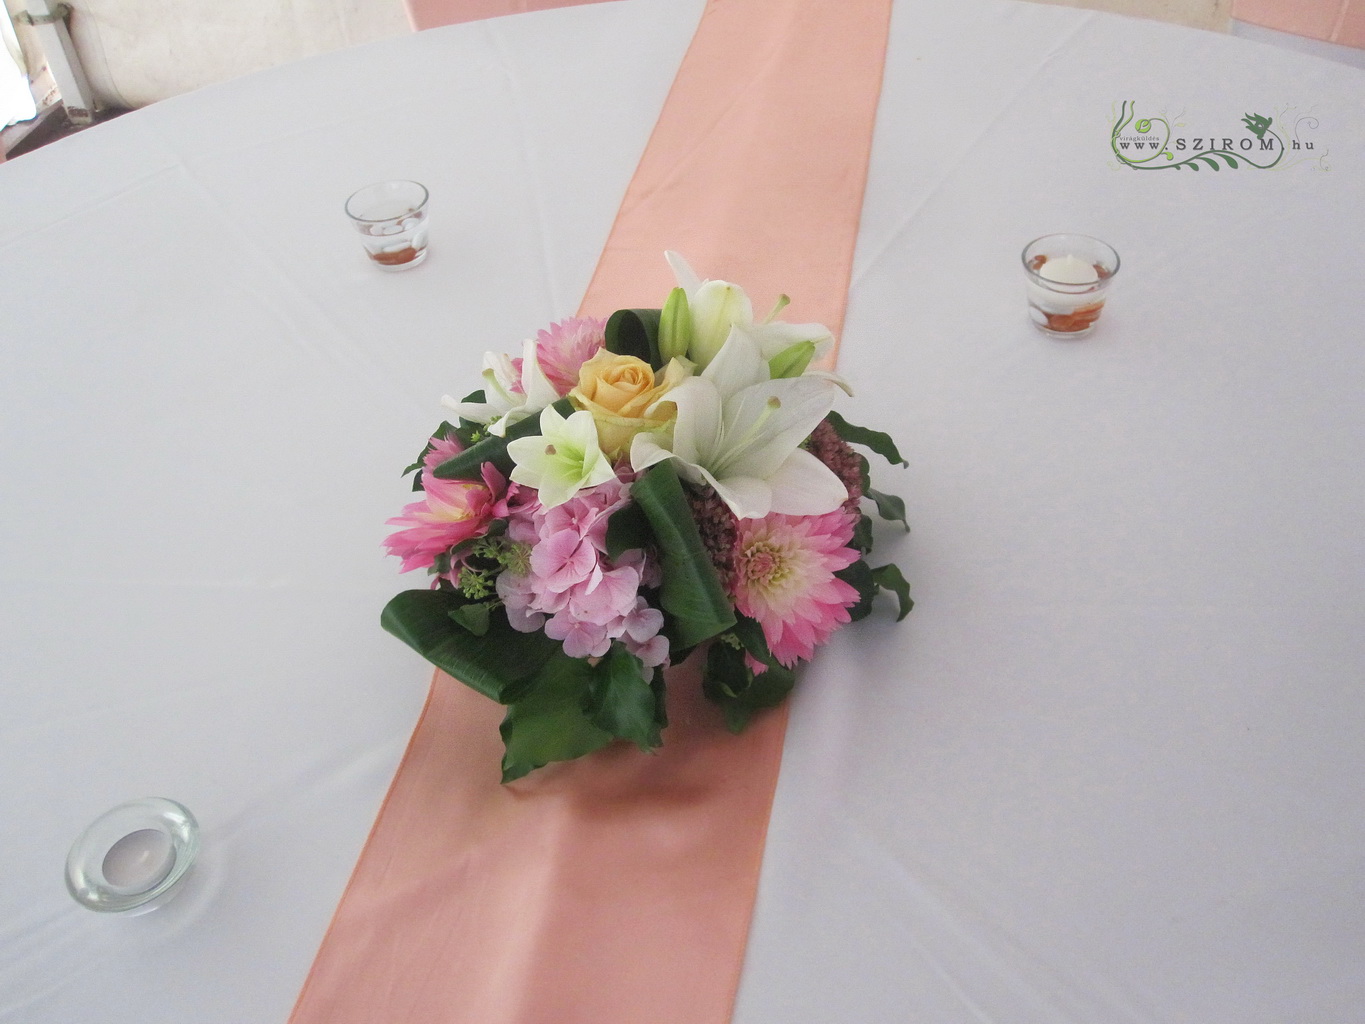 flower delivery Budapest - Centerpiece with dahlias (pink, cream), wedding